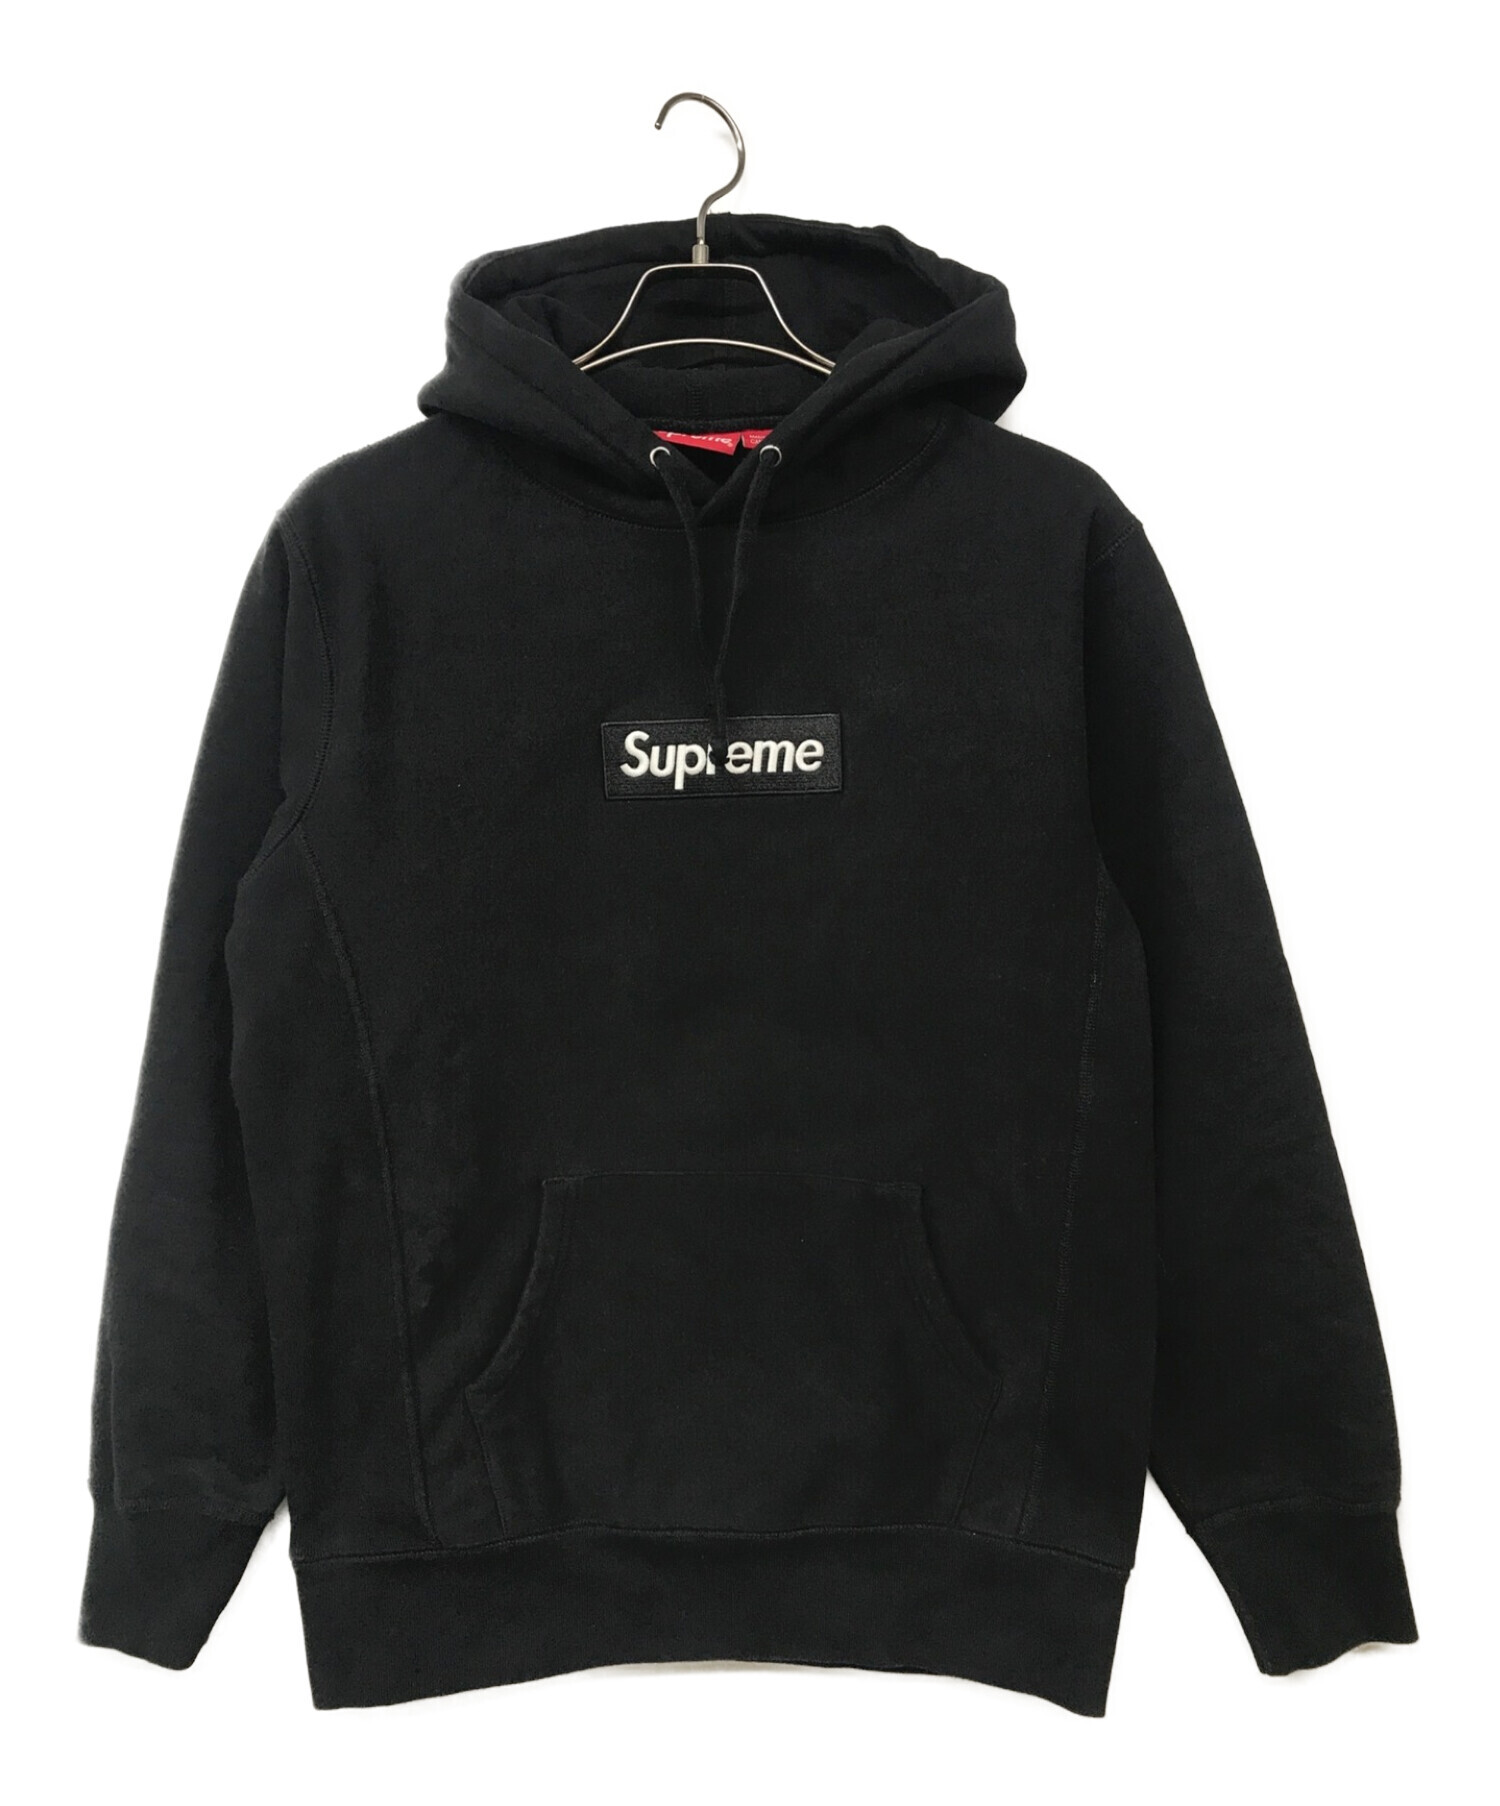 BlackサイズSupreme Box Logo Hooded Sweatshirt サイズL